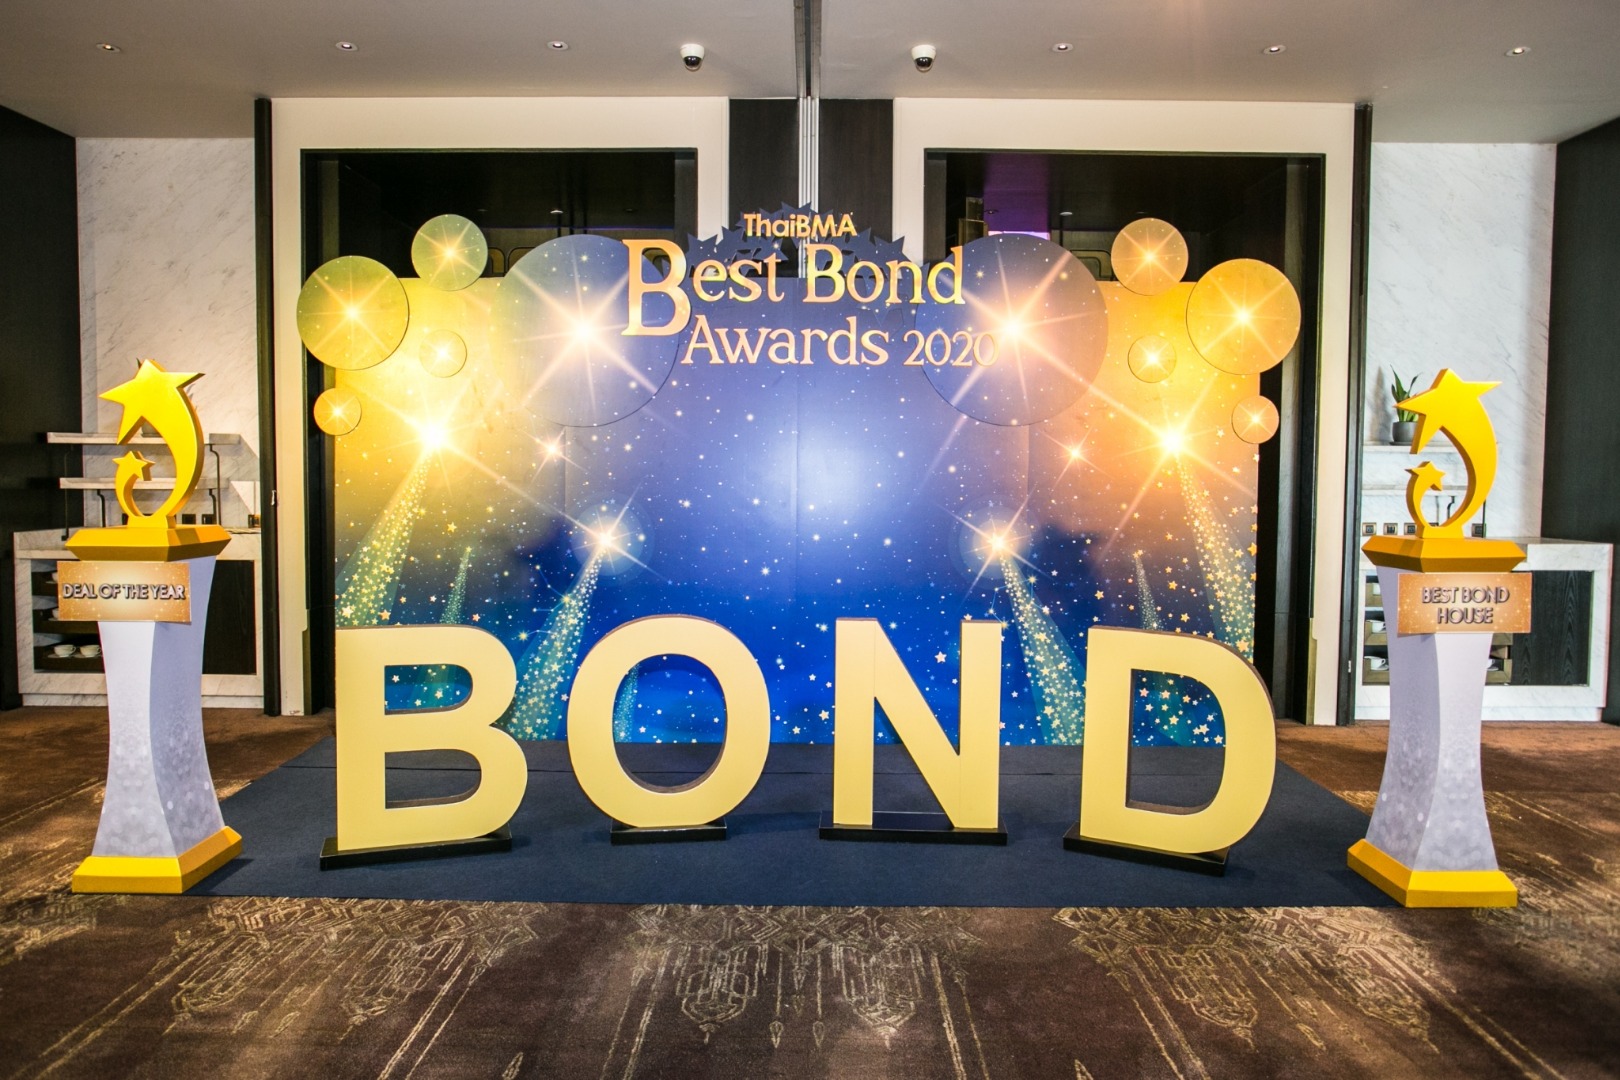 Thai BMA Best Bond Awards 2020